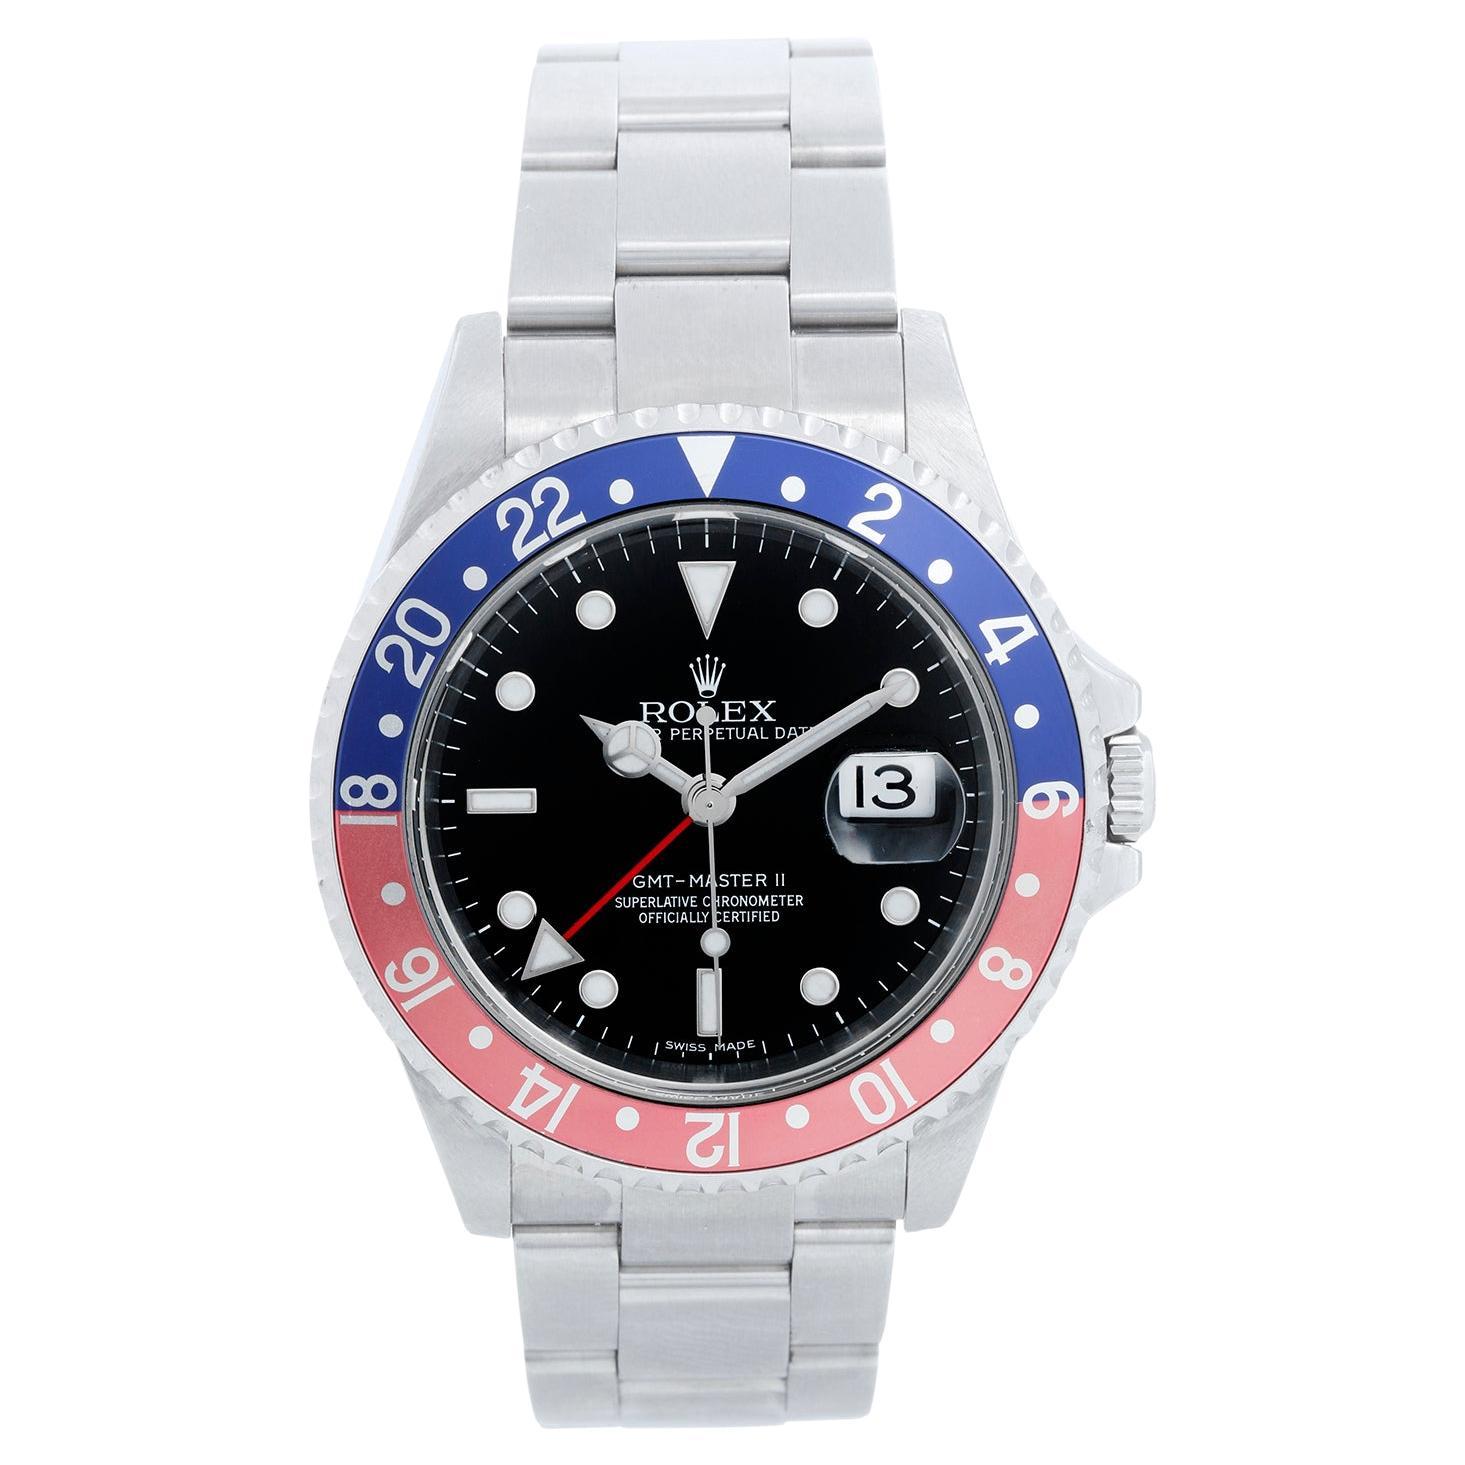 Men's Rolex GMT-Master II Watch 16710